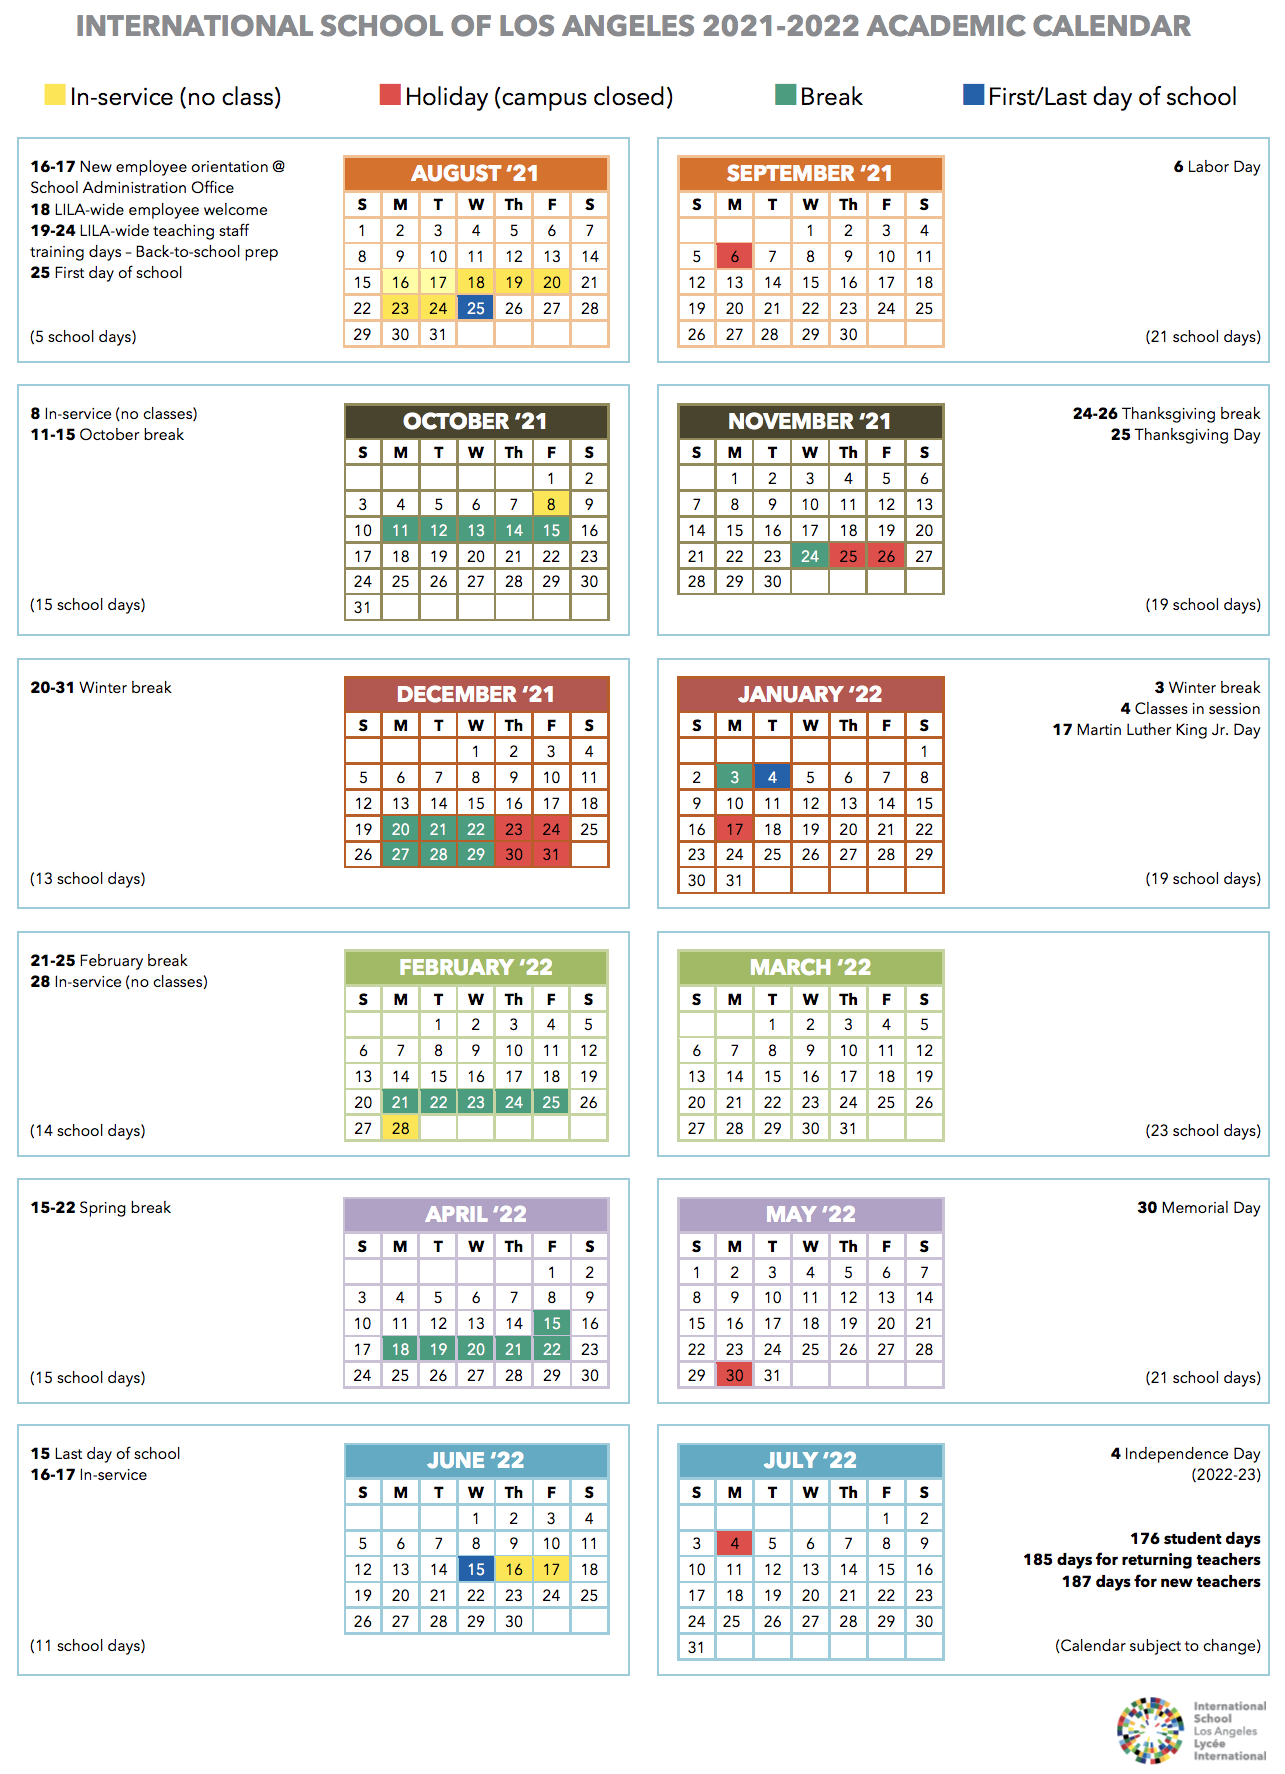 Csun 2022 23 Calendar Calendar | International School Of Los Angeles